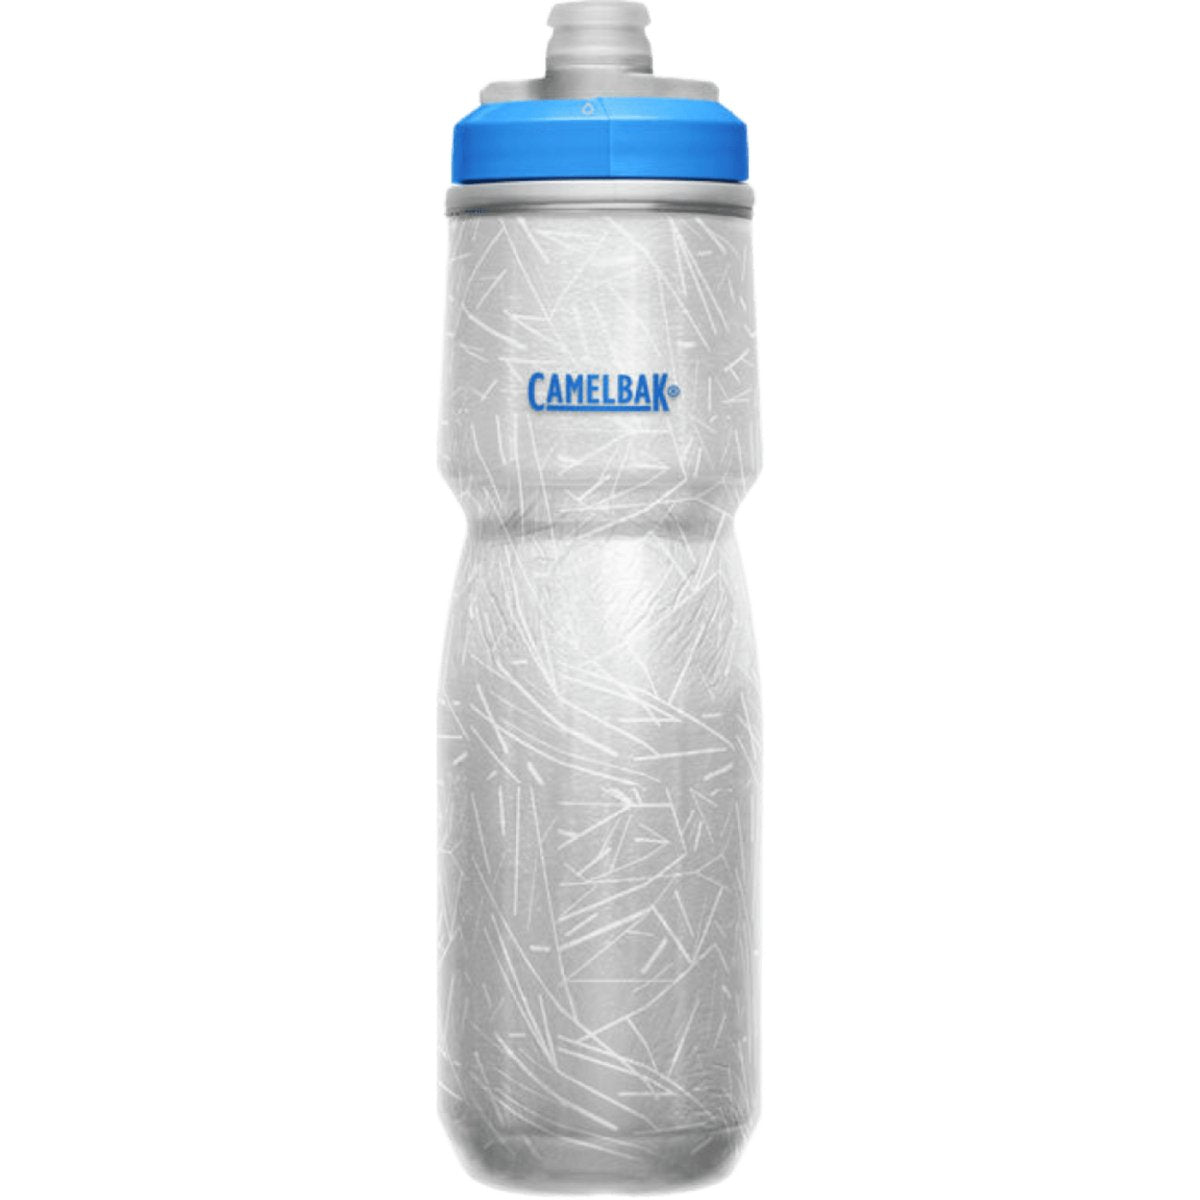 Camelbak Podium Ice 21 oz. Bottle | The Bike Affair